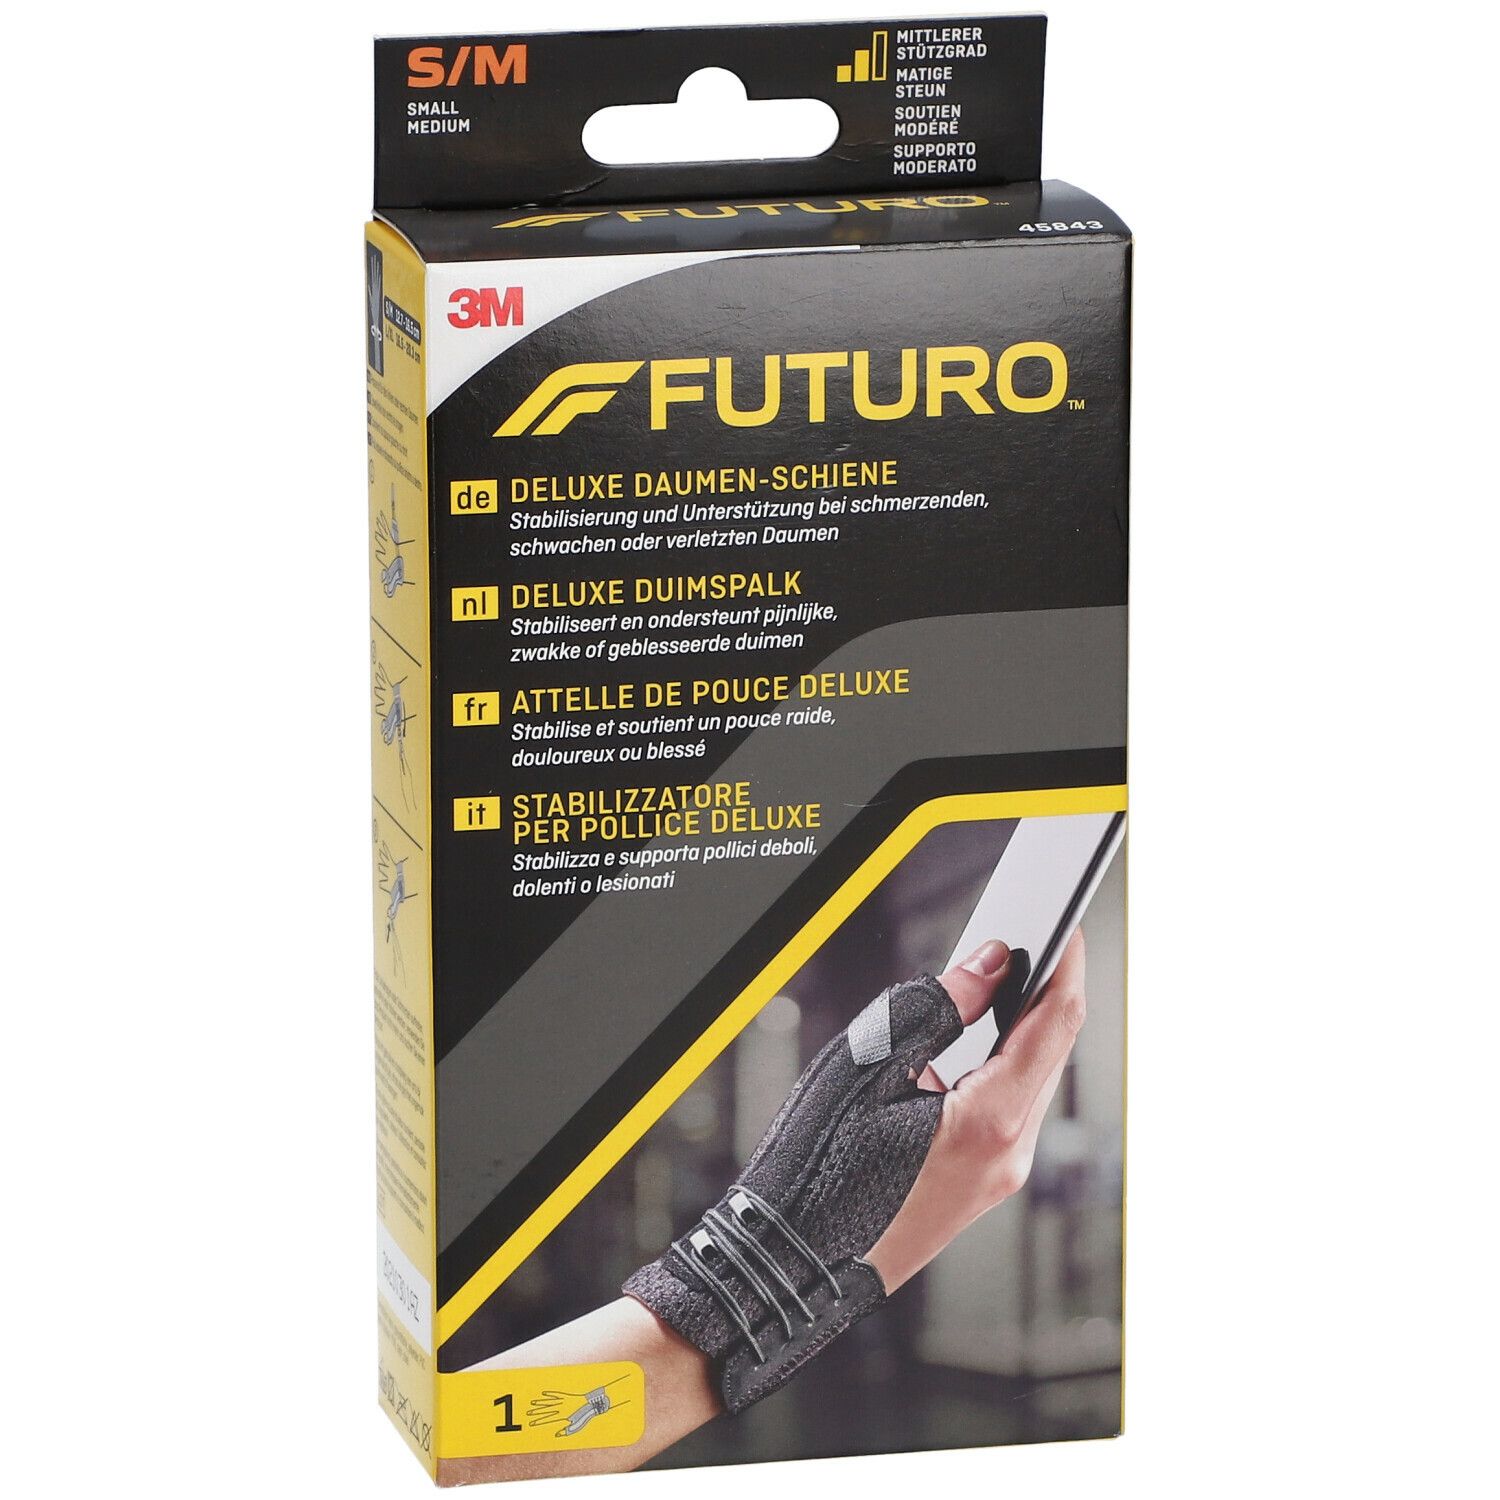 3M FUTURO comfrot stabilizing WRIST brace adjustable Retail's $26